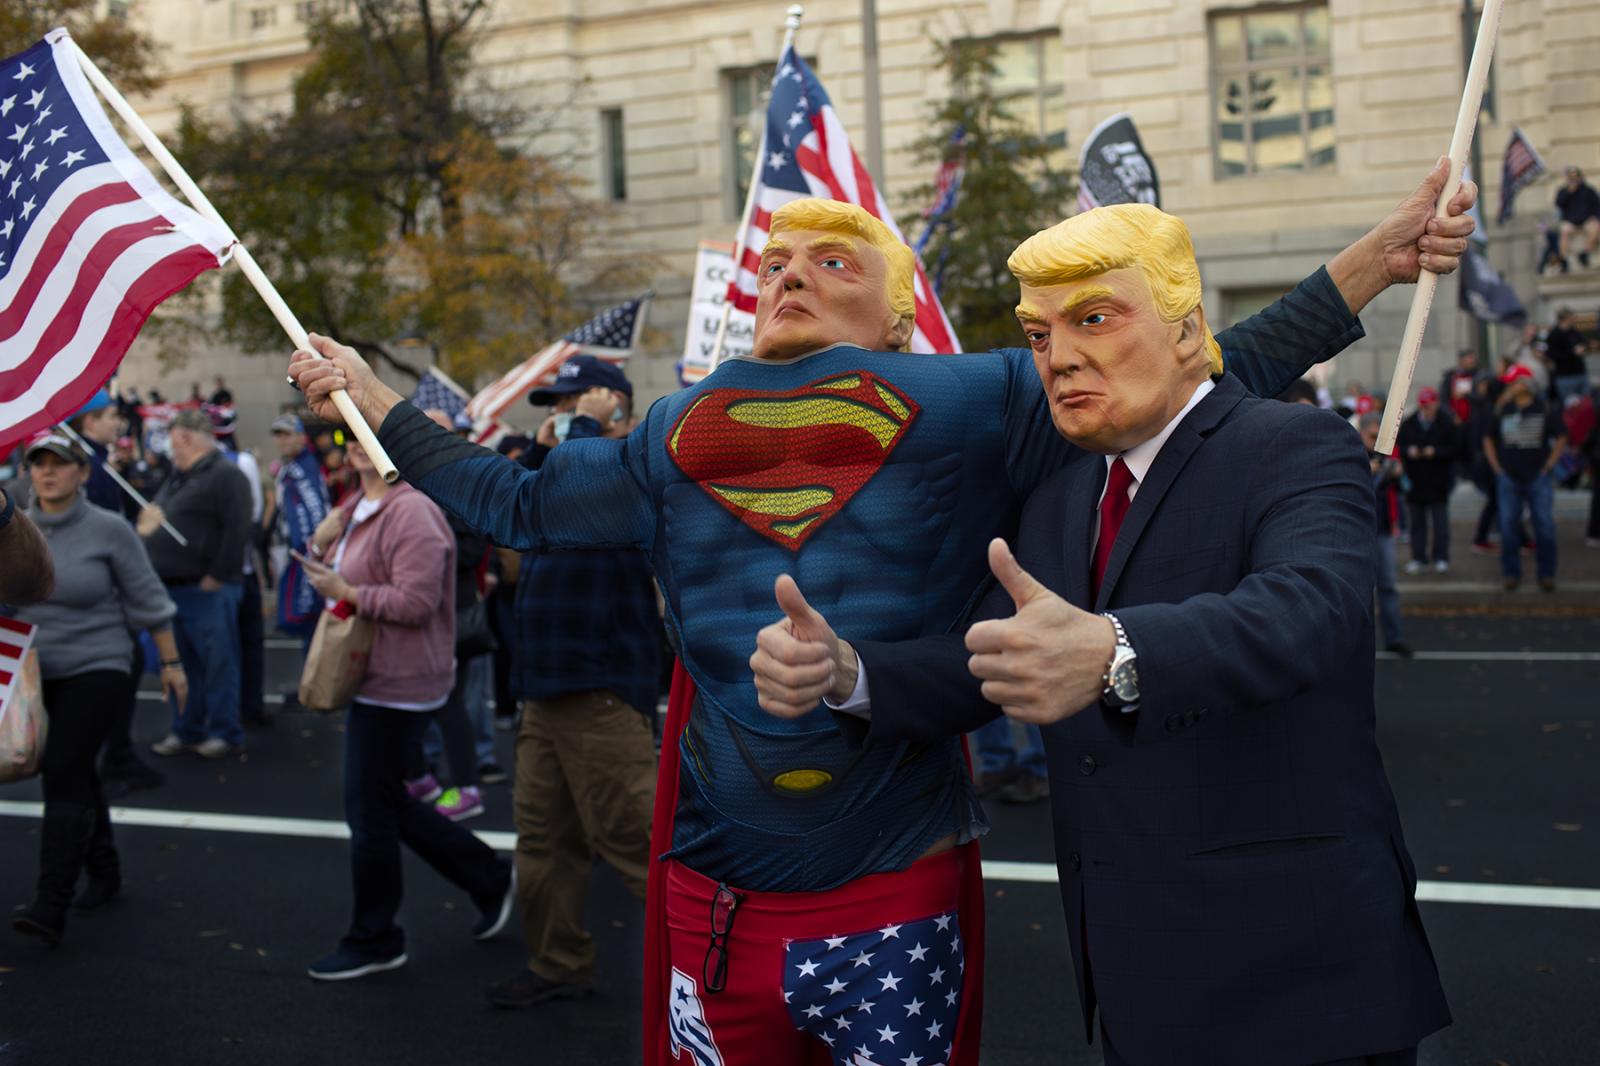 MAGA rally at Freedom Plaza in ...ton D.C., November 14th, 2020. 